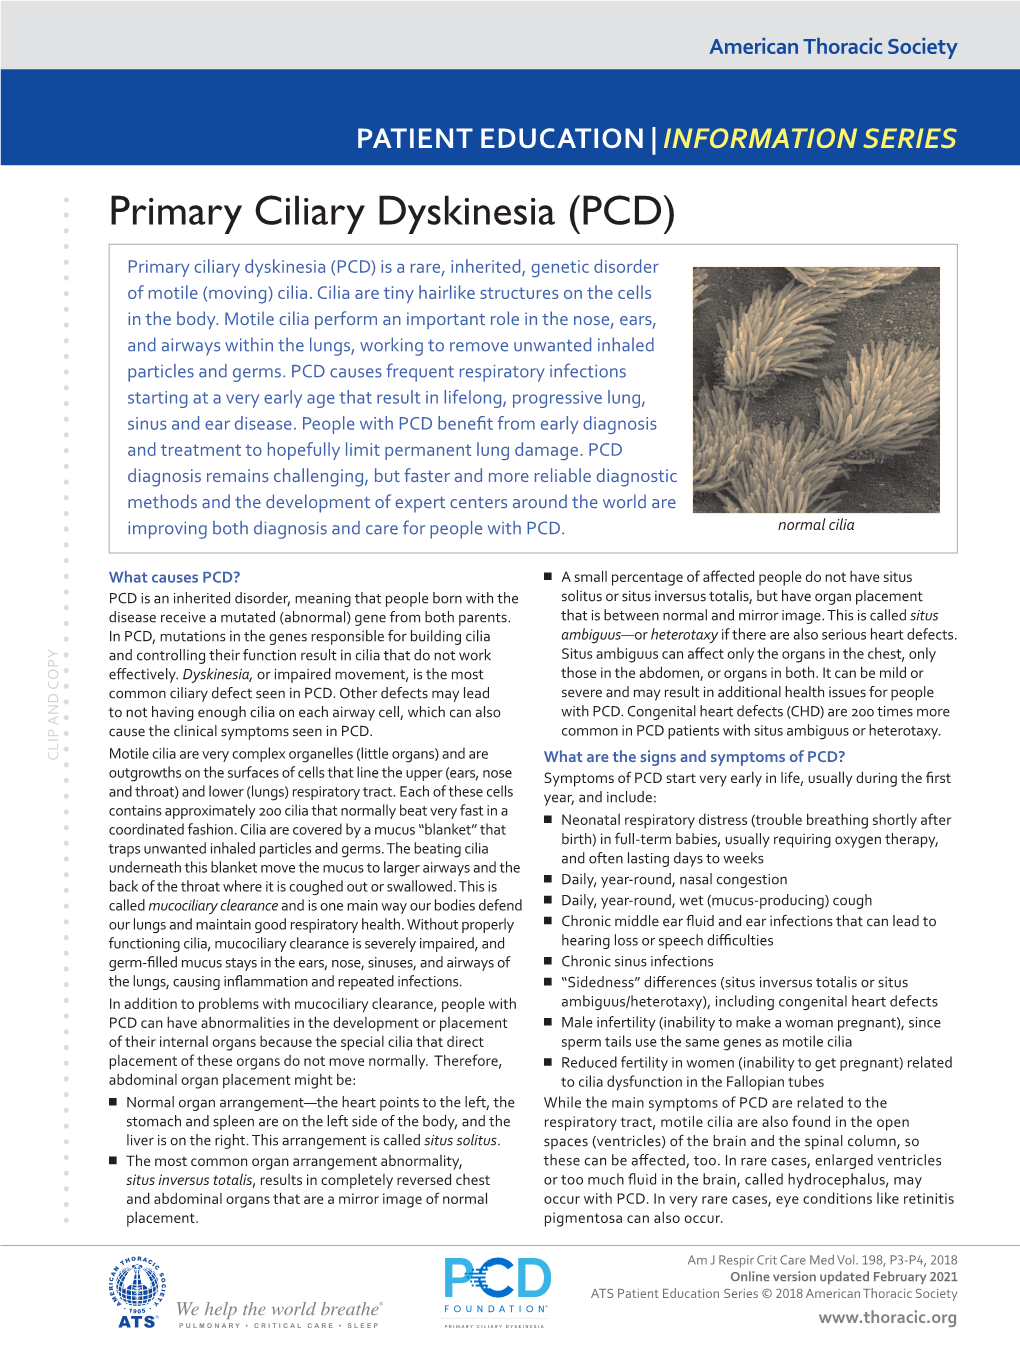 Primary Ciliary Dyskinesia (PCD)